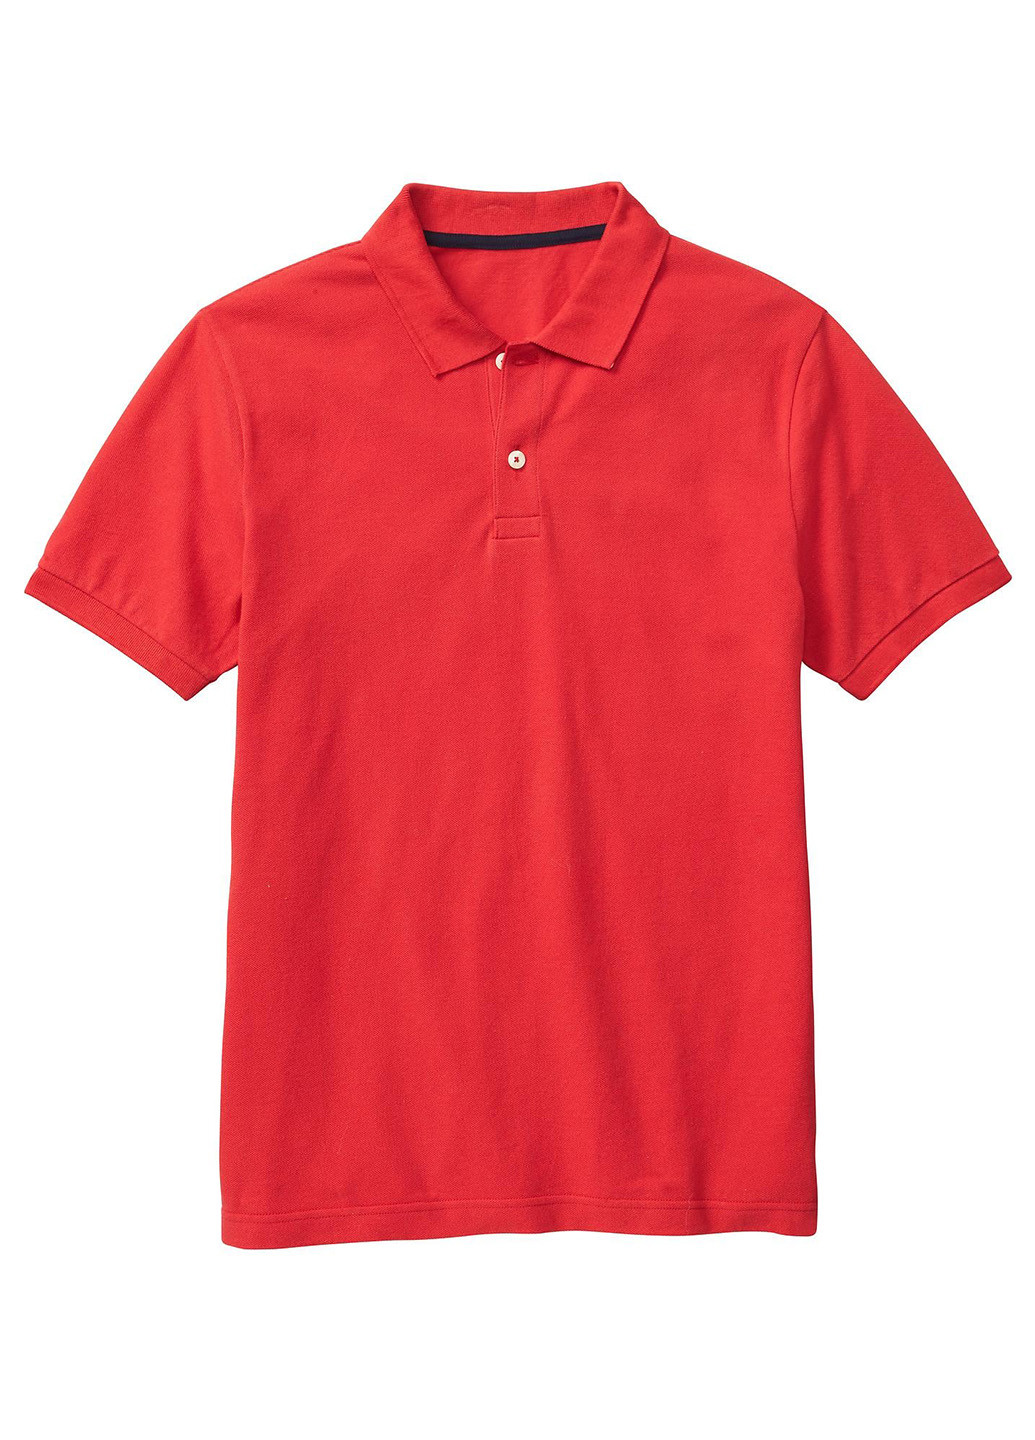 Красная футболка-футболка для мужчин Gap однотонная